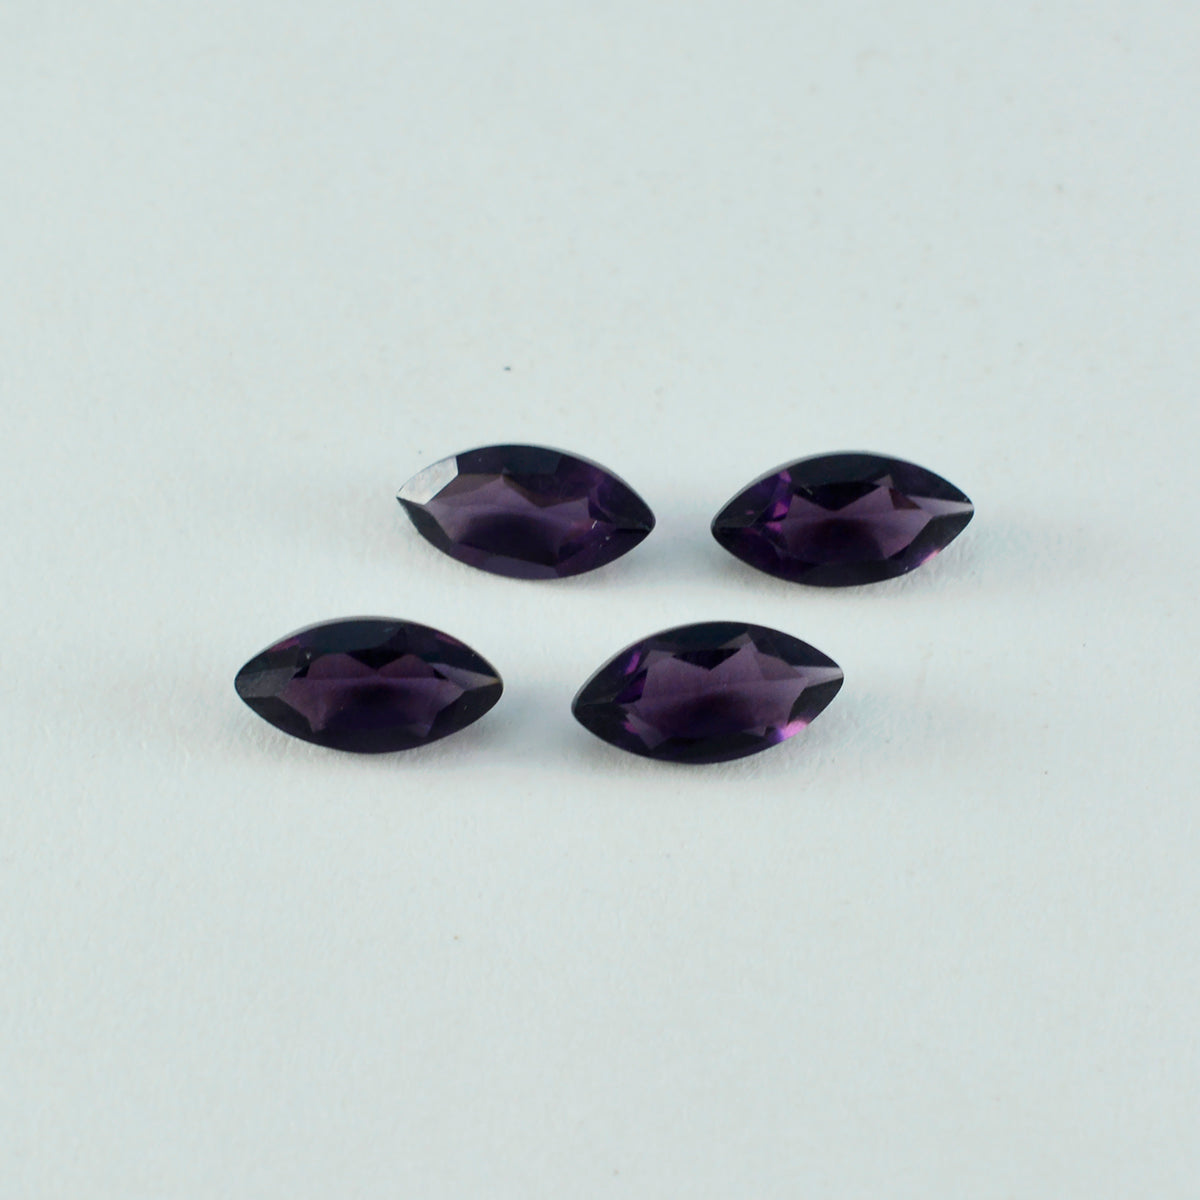 Riyogems 1PC Purple Amethyst CZ Faceted 9x18 mm Marquise Shape pretty Quality Loose Gem